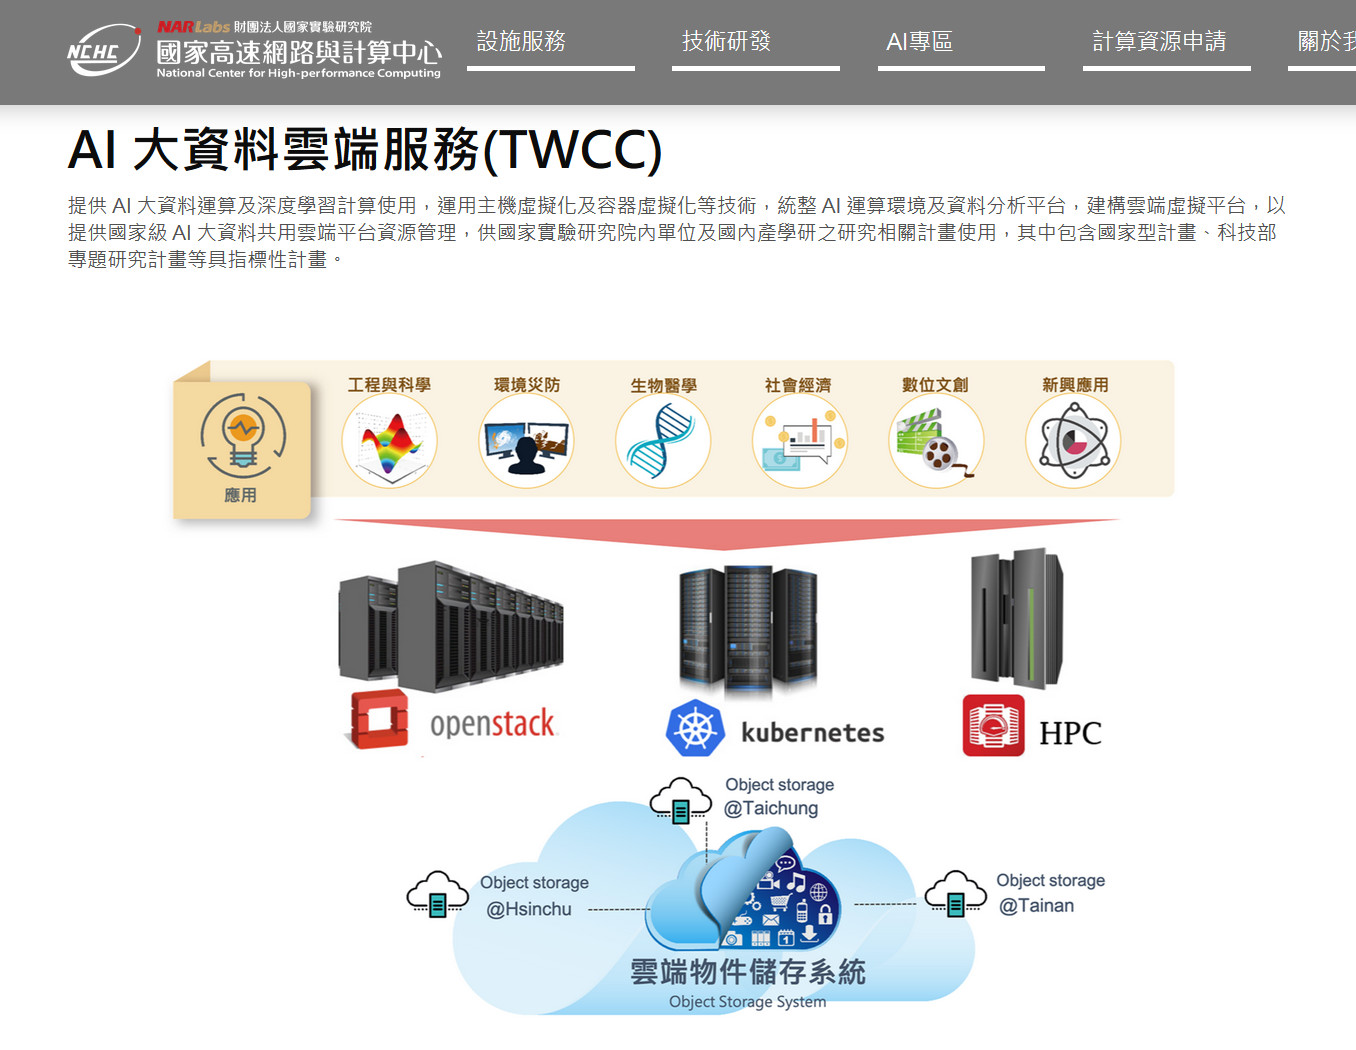 Taiwania2 & Taiwan Computing Cloud